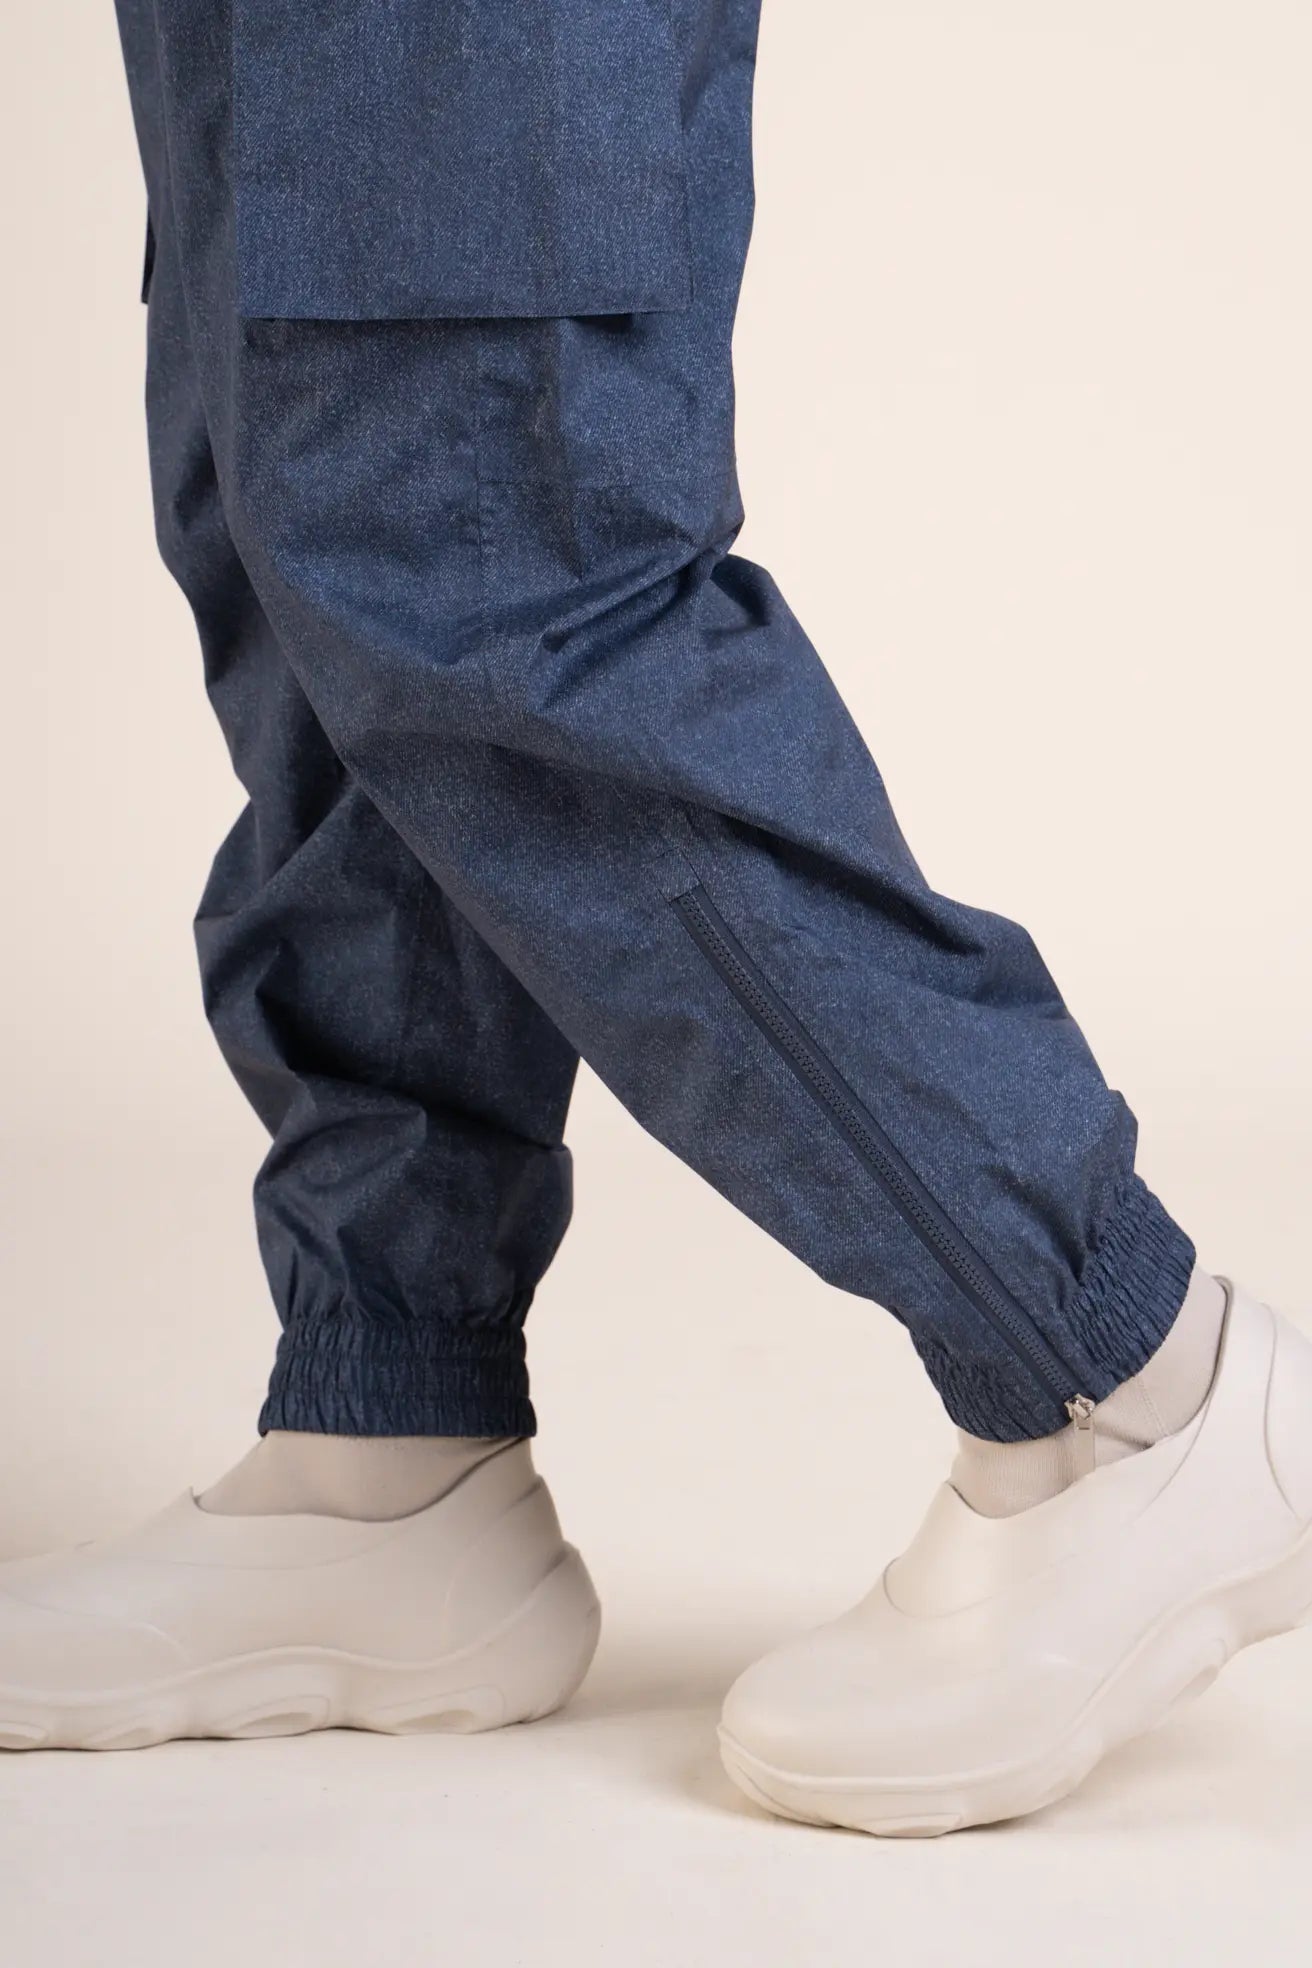 Pantalon imperméable Gambetta cargo multipoches #couleur_denim